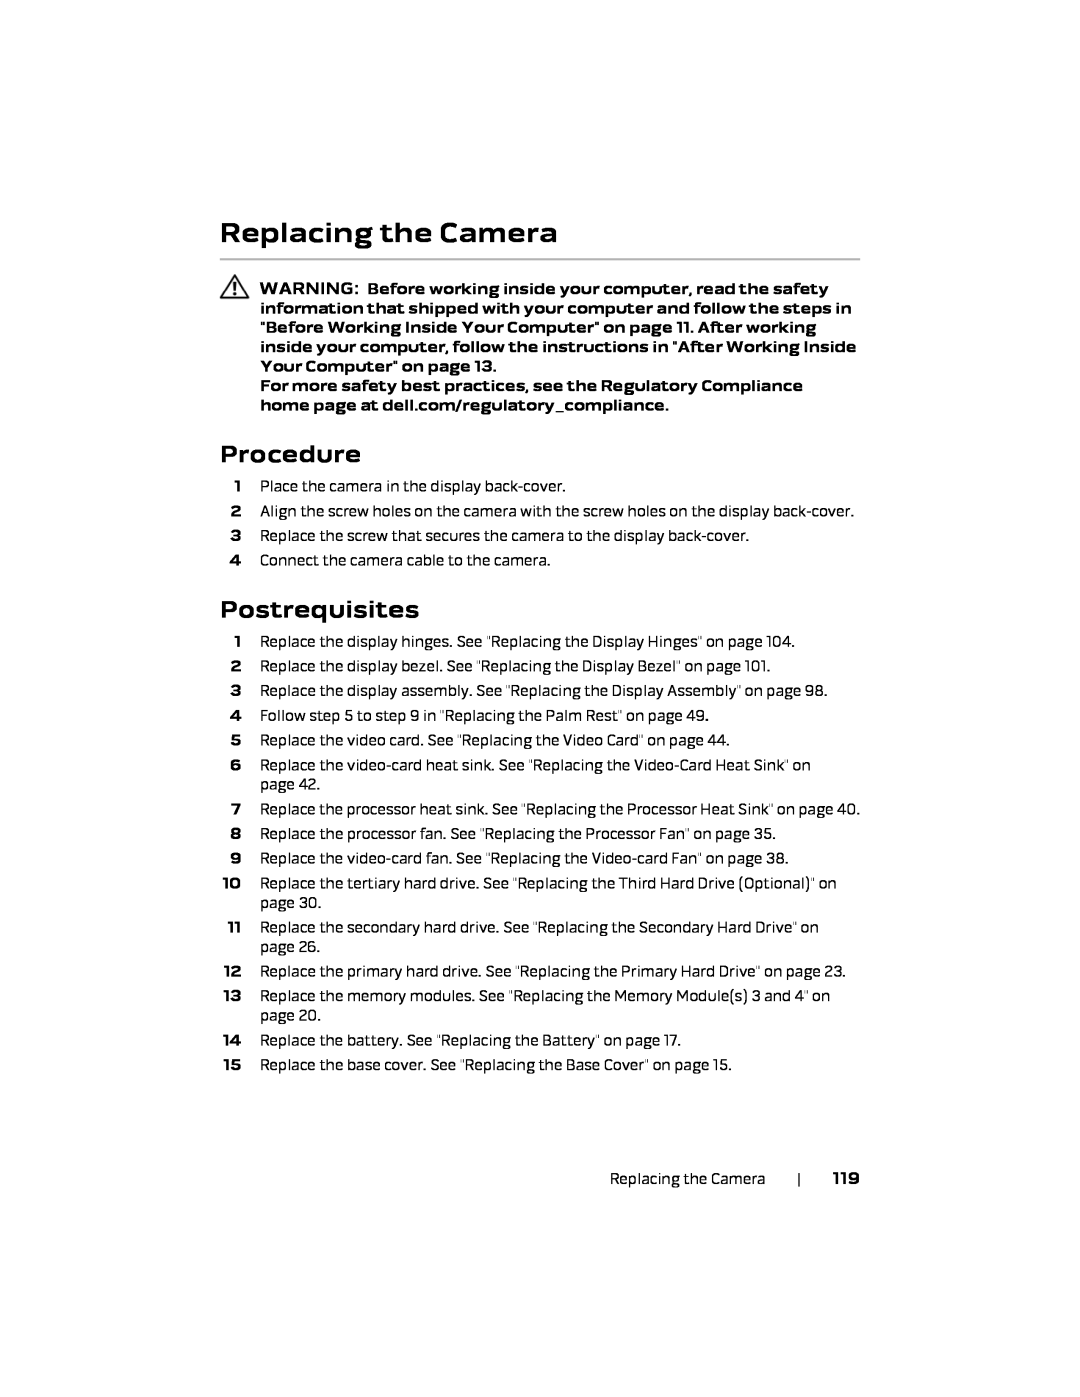 Alienware 17 R1, P18E owner manual Replacing the Camera, Procedure, Postrequisites 